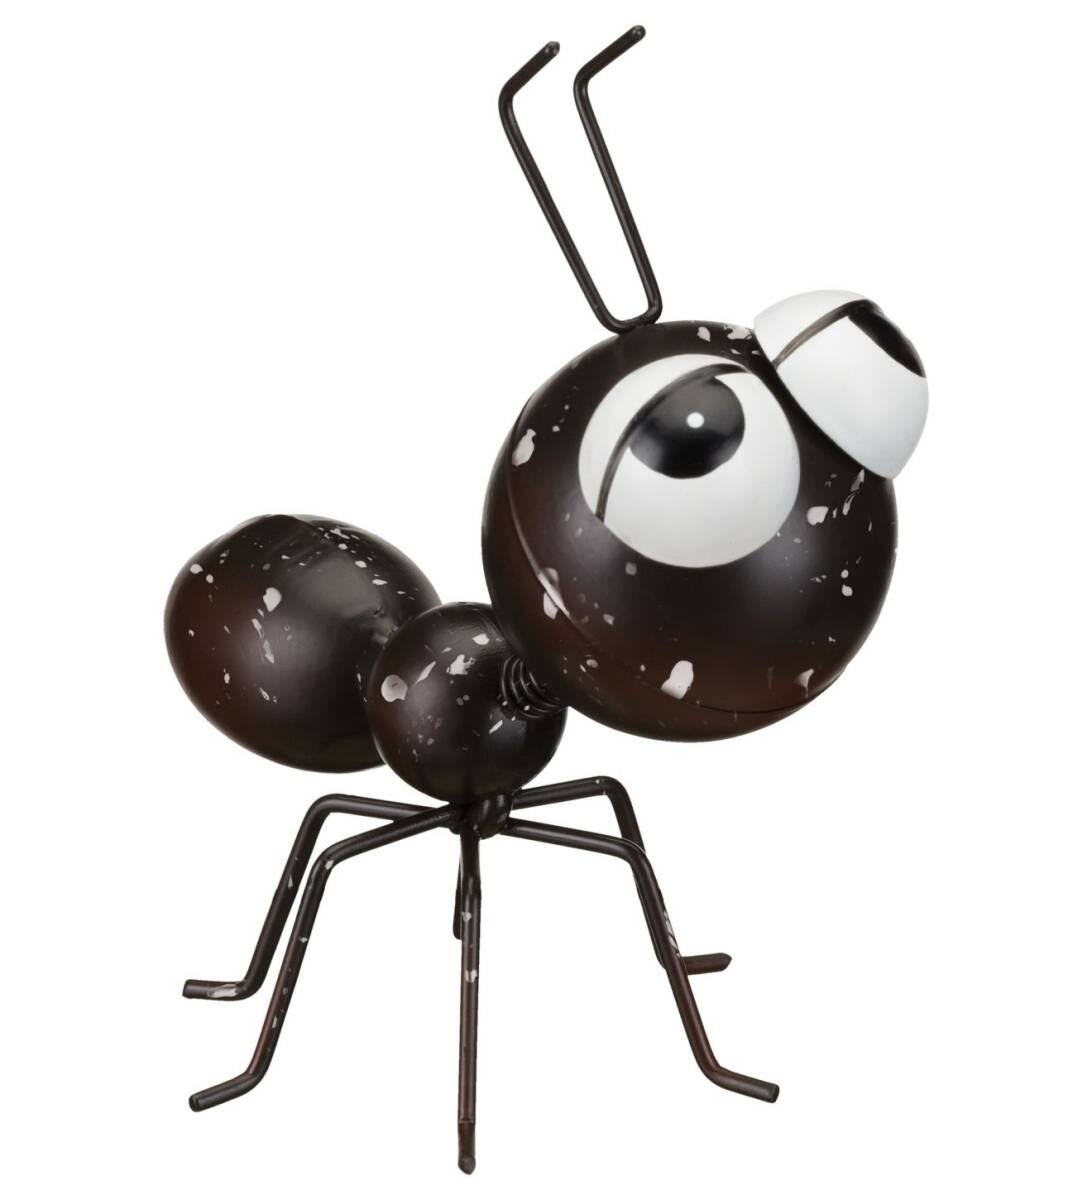 Regal Art Gift Regal12642 Mini Buggy Decor Ant